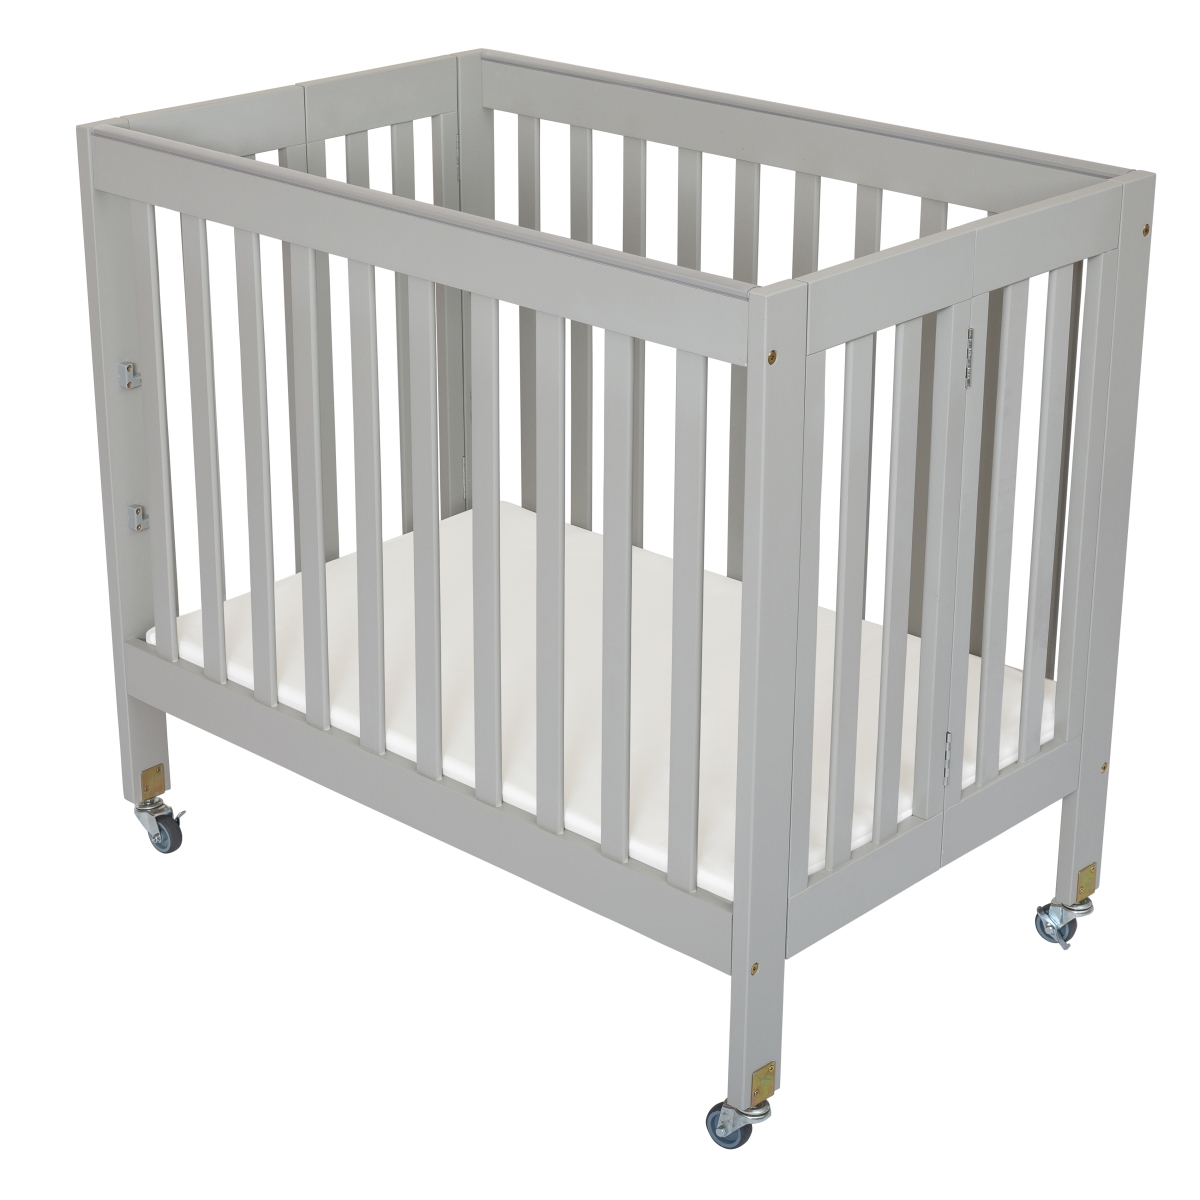 901-22-g Portable Crib, Grey